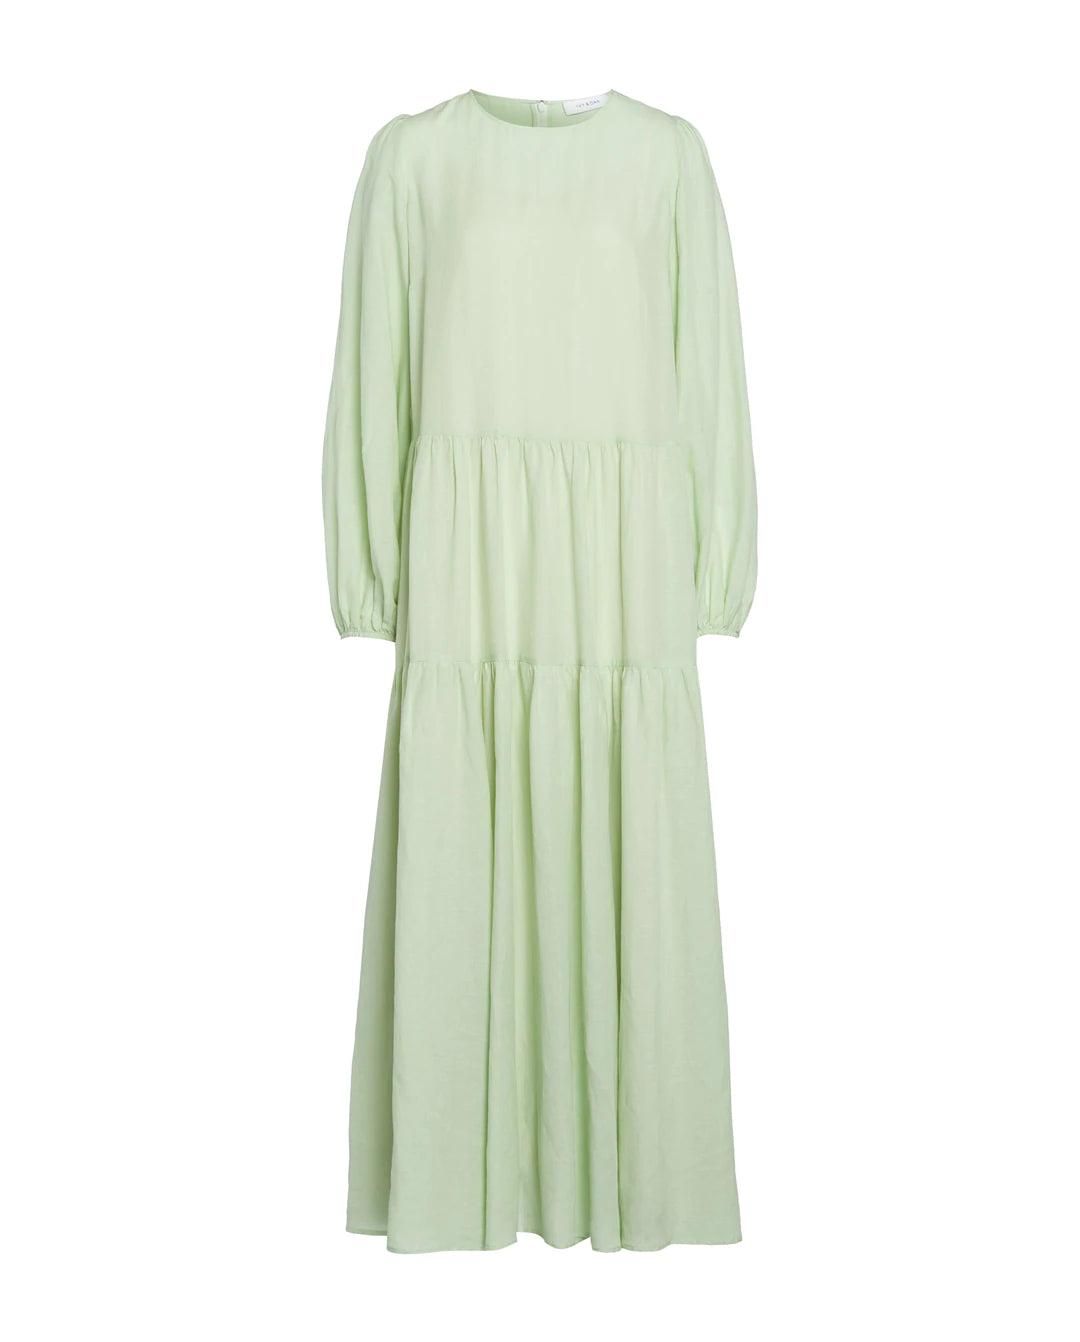 Despina Dress in pastel green